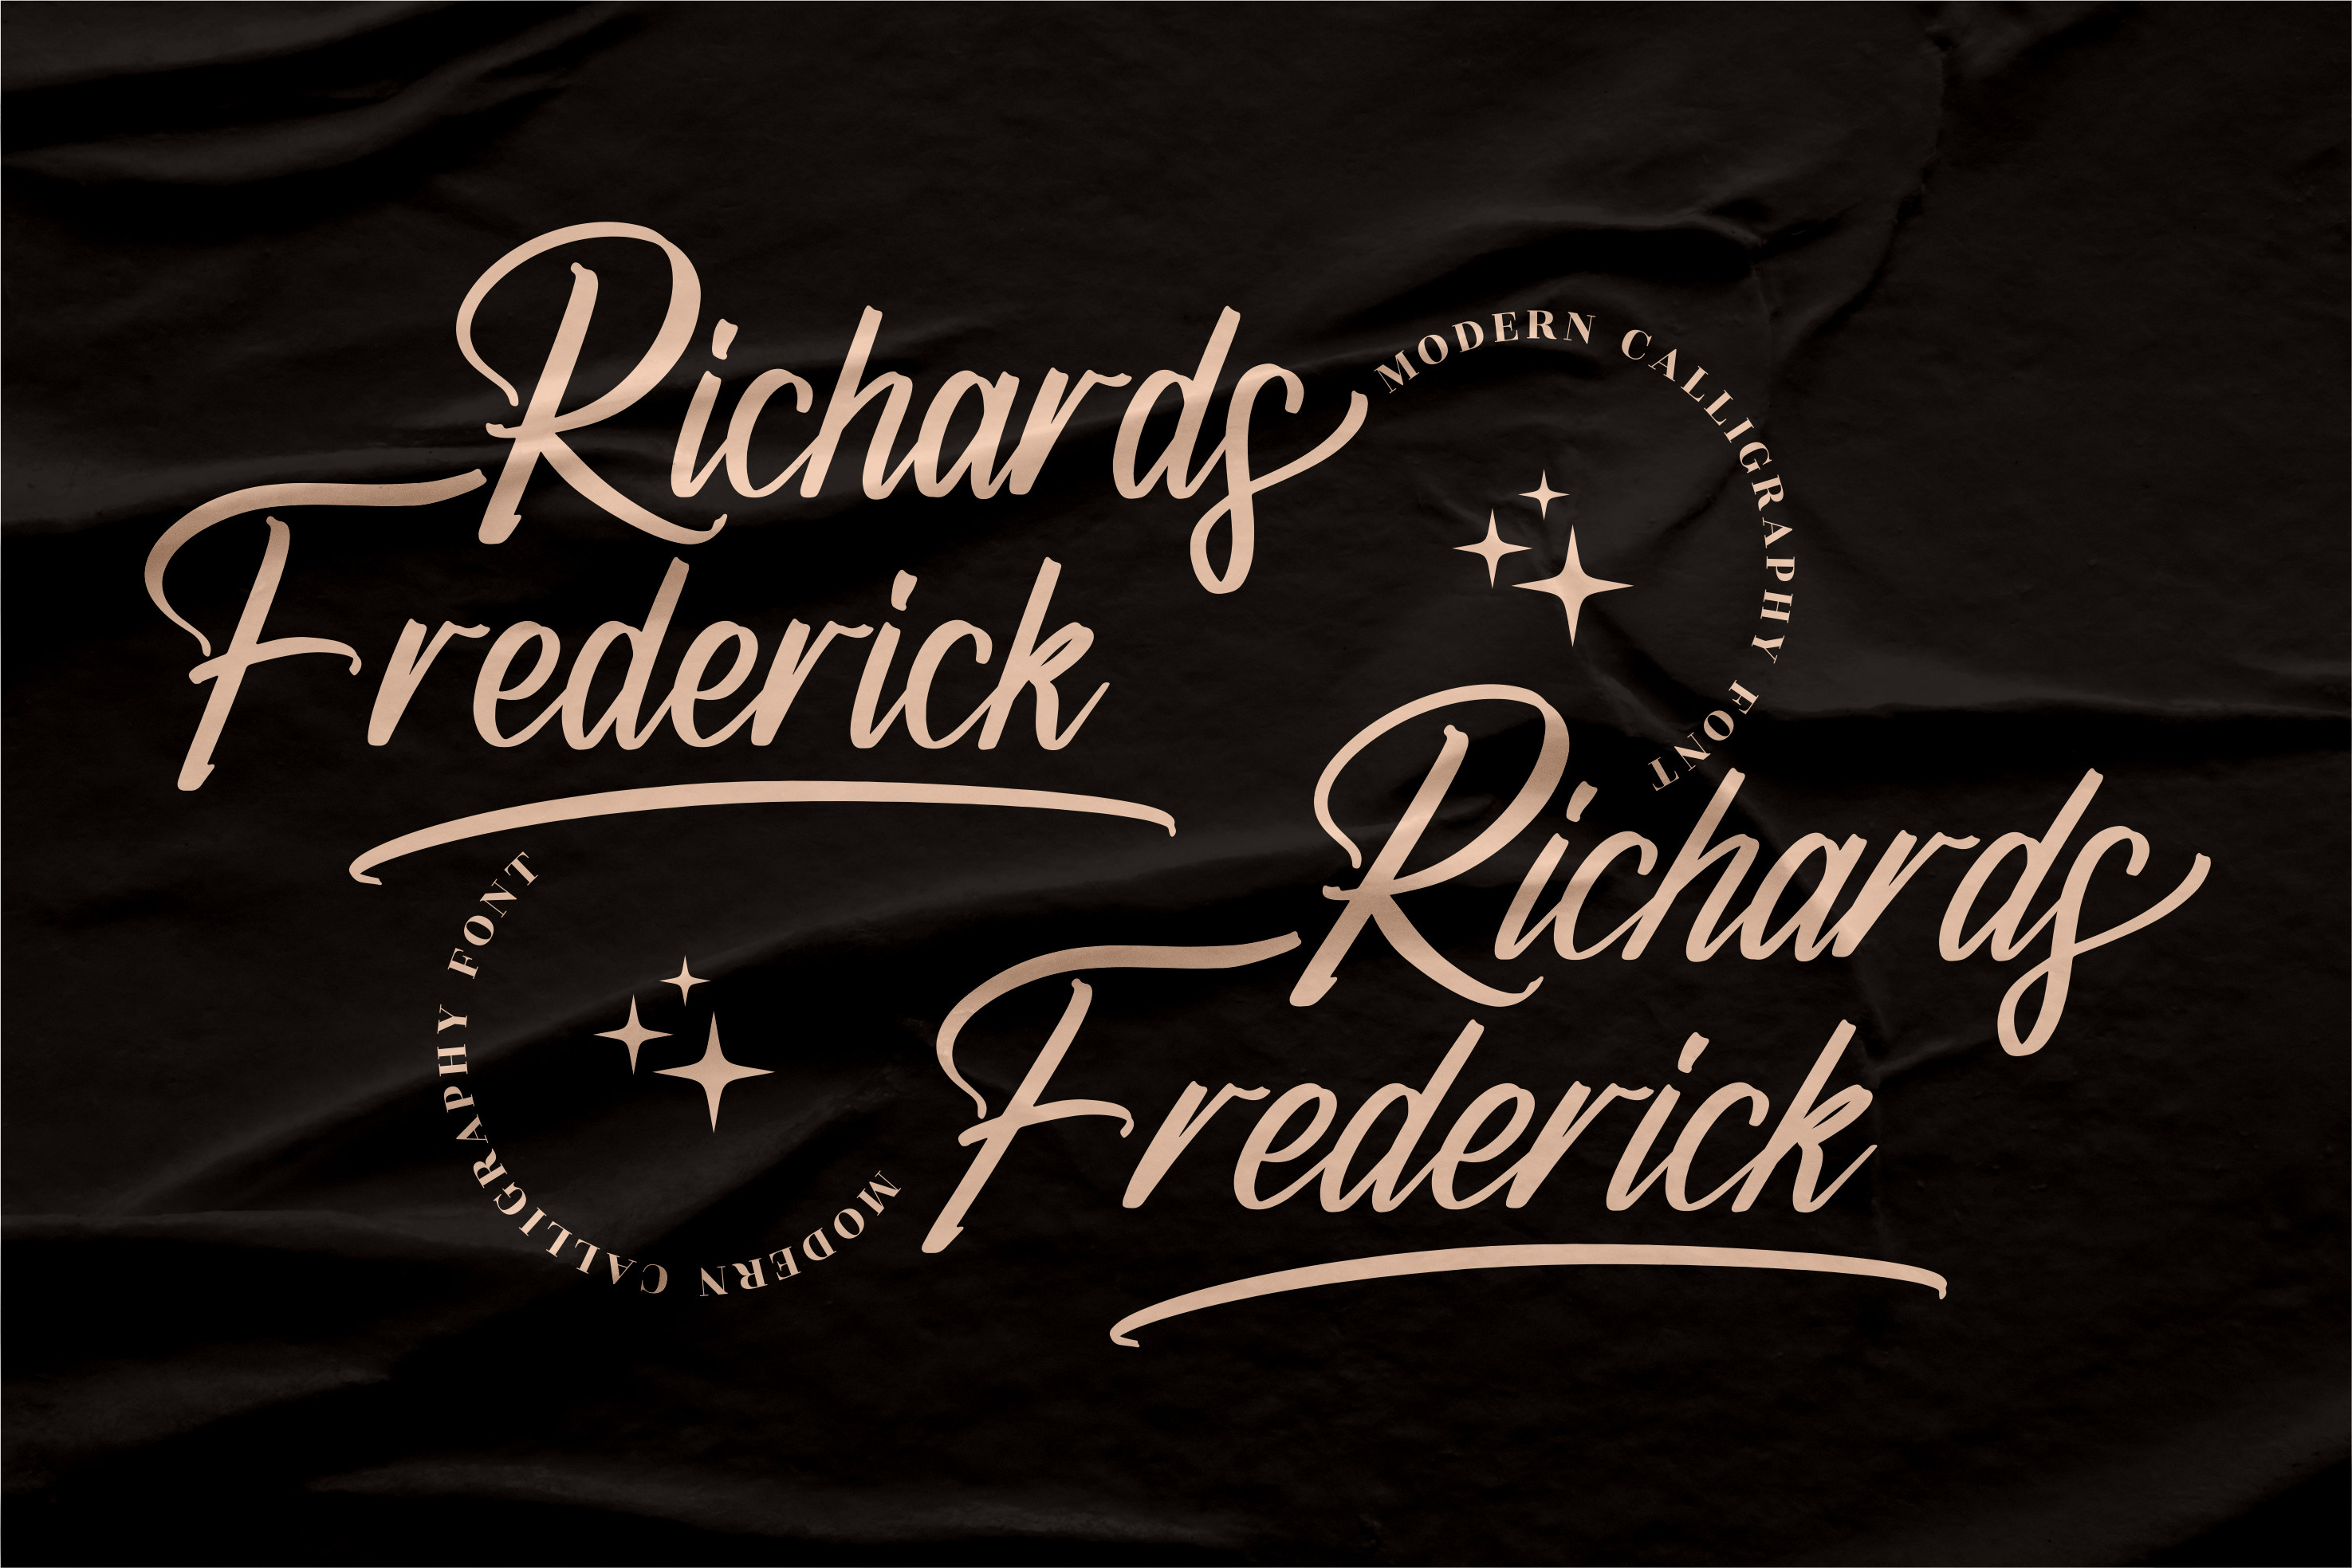 Richards Frederick